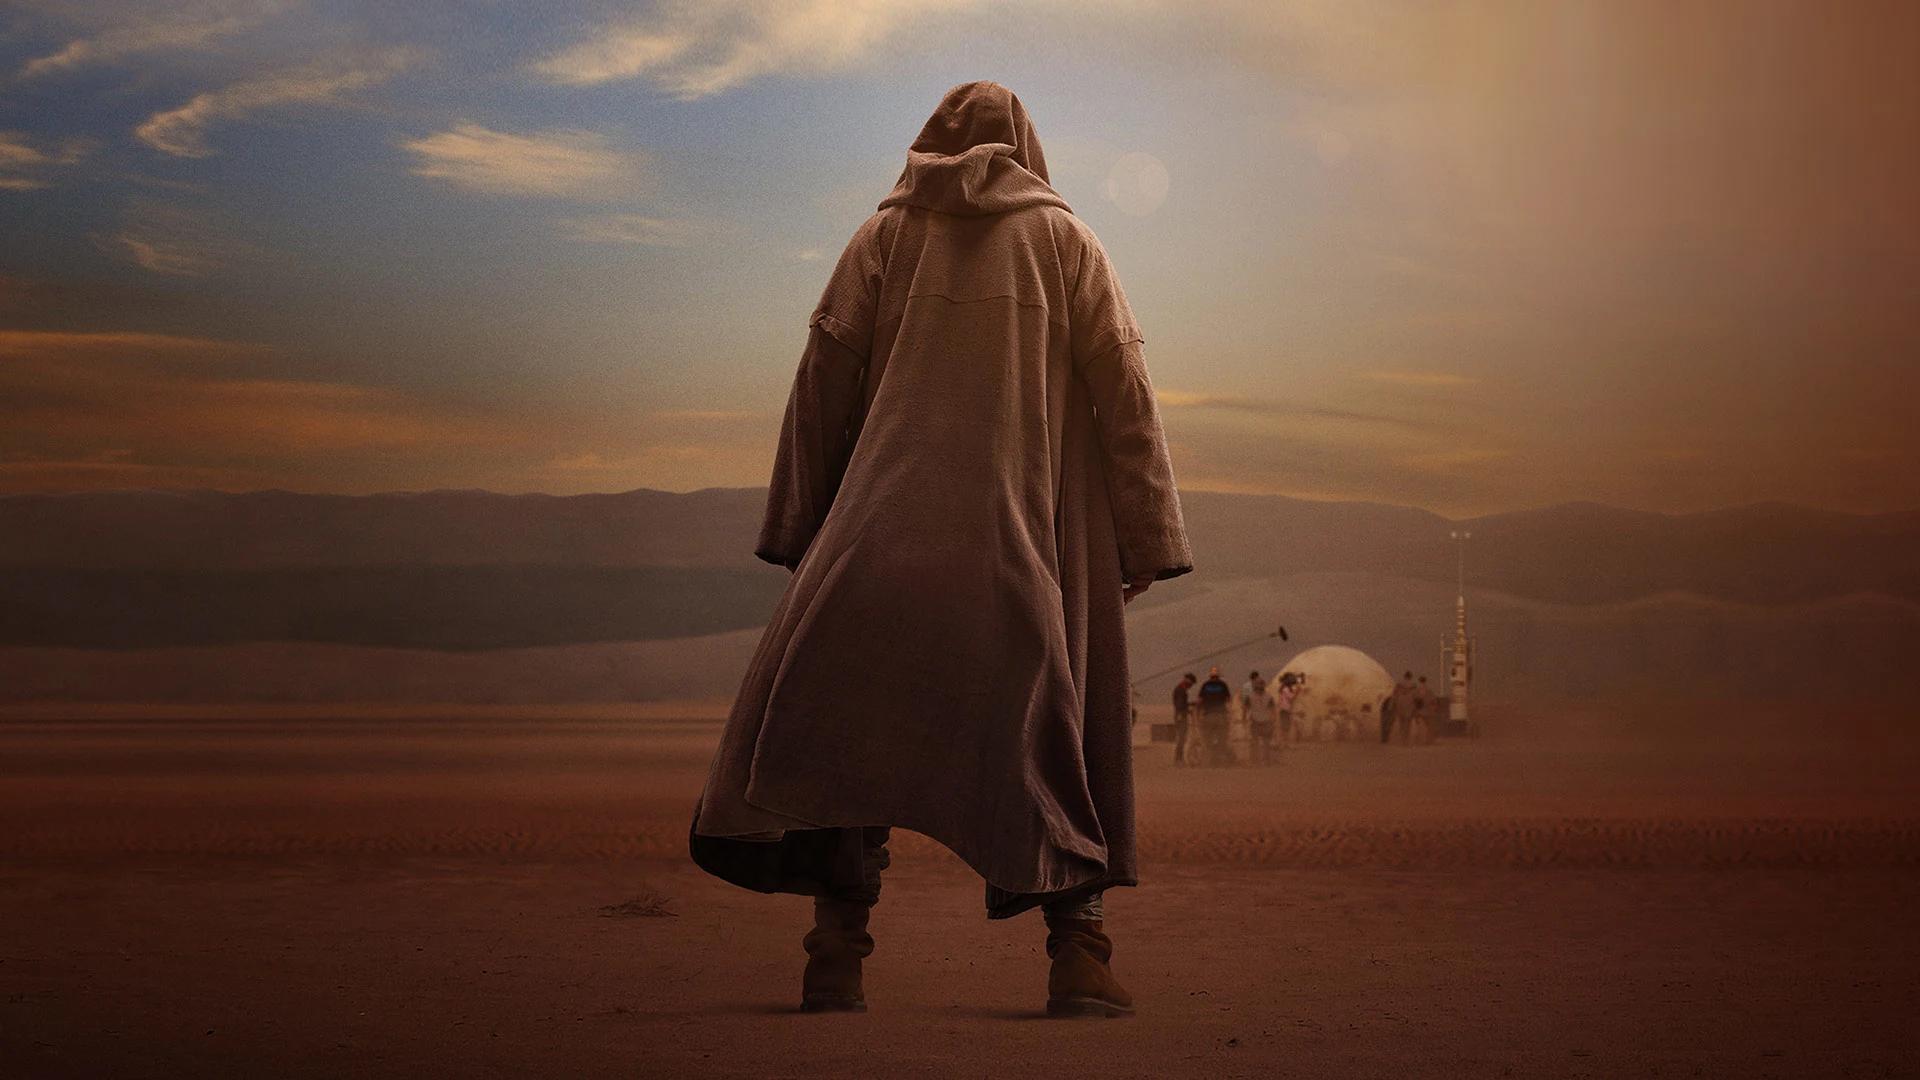 Obi-Wan Kenobi: A Jedi’s Return